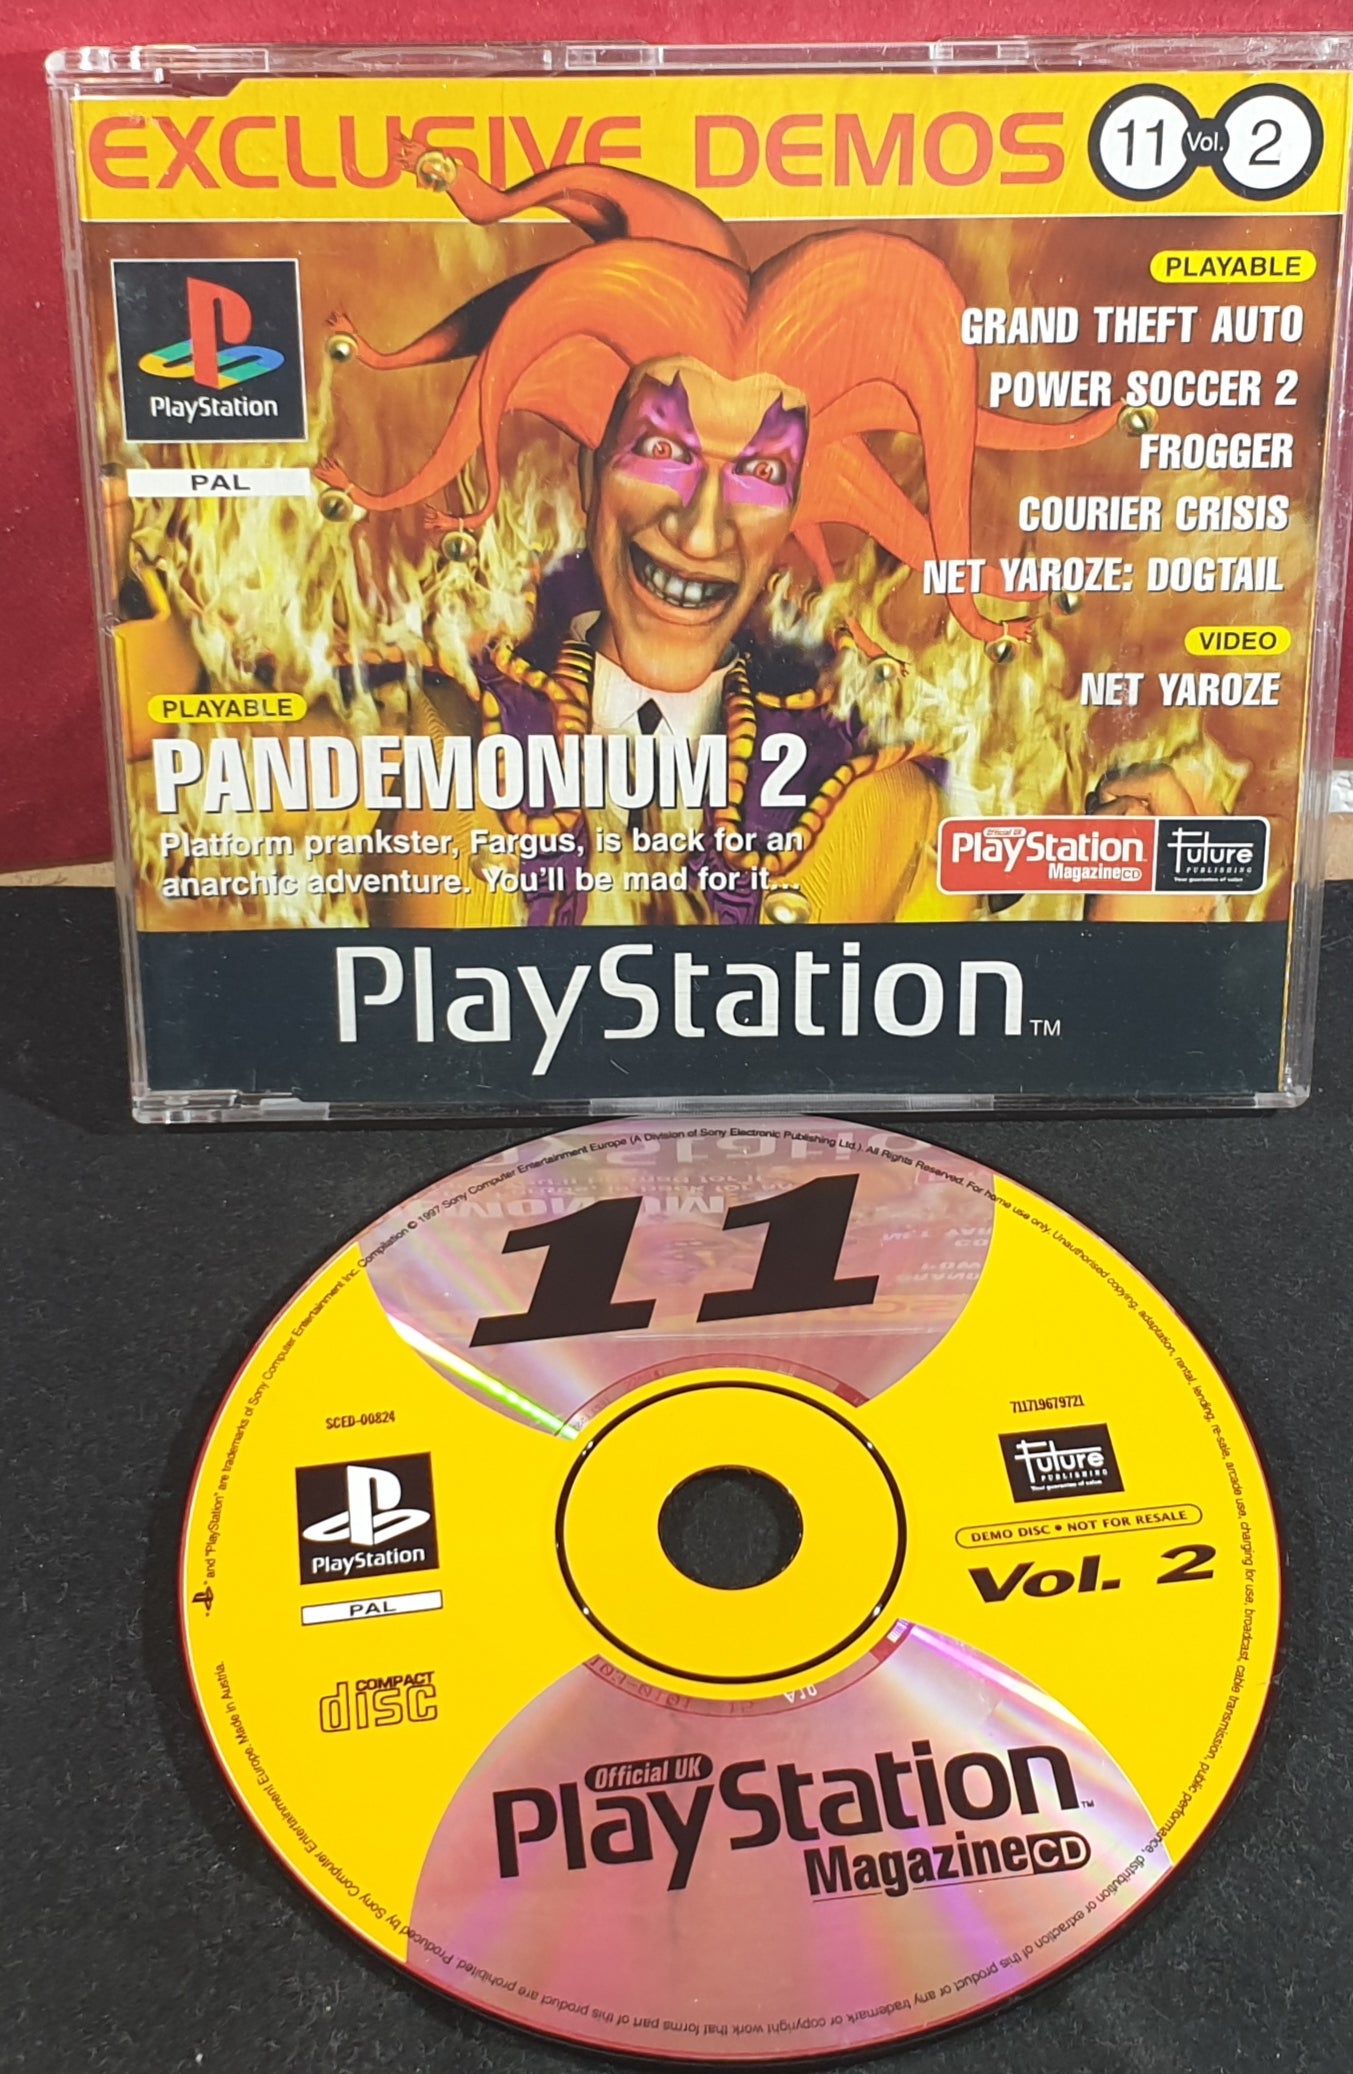 Sony Playstation 1 (PS1) Magazine Demo Disc 11 Vol 2